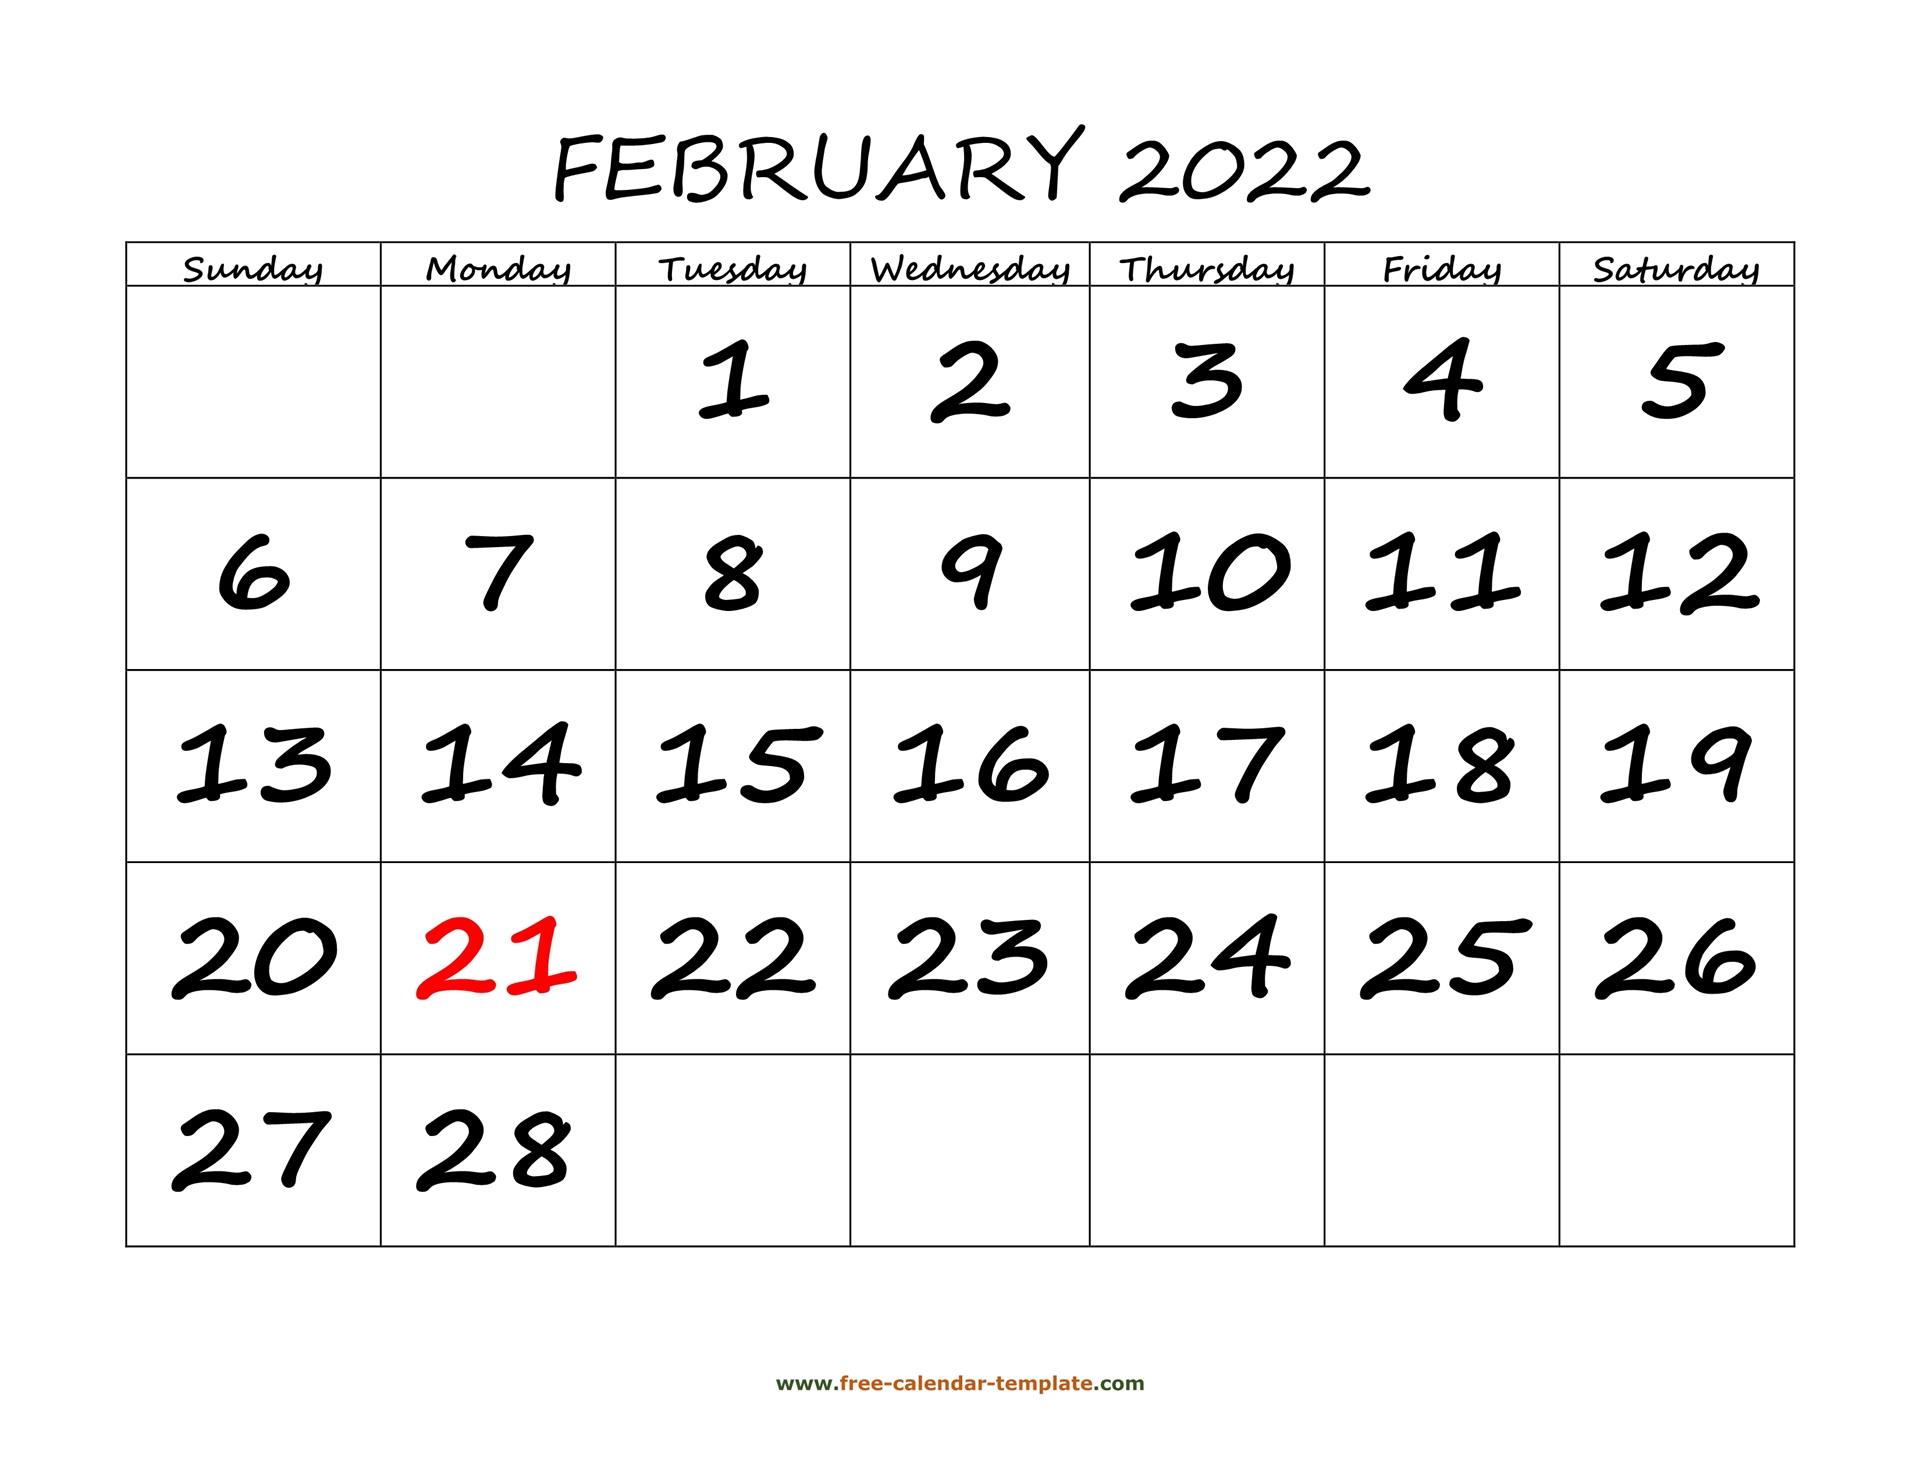 February 2022 Free Calendar | December 2022 Calendar